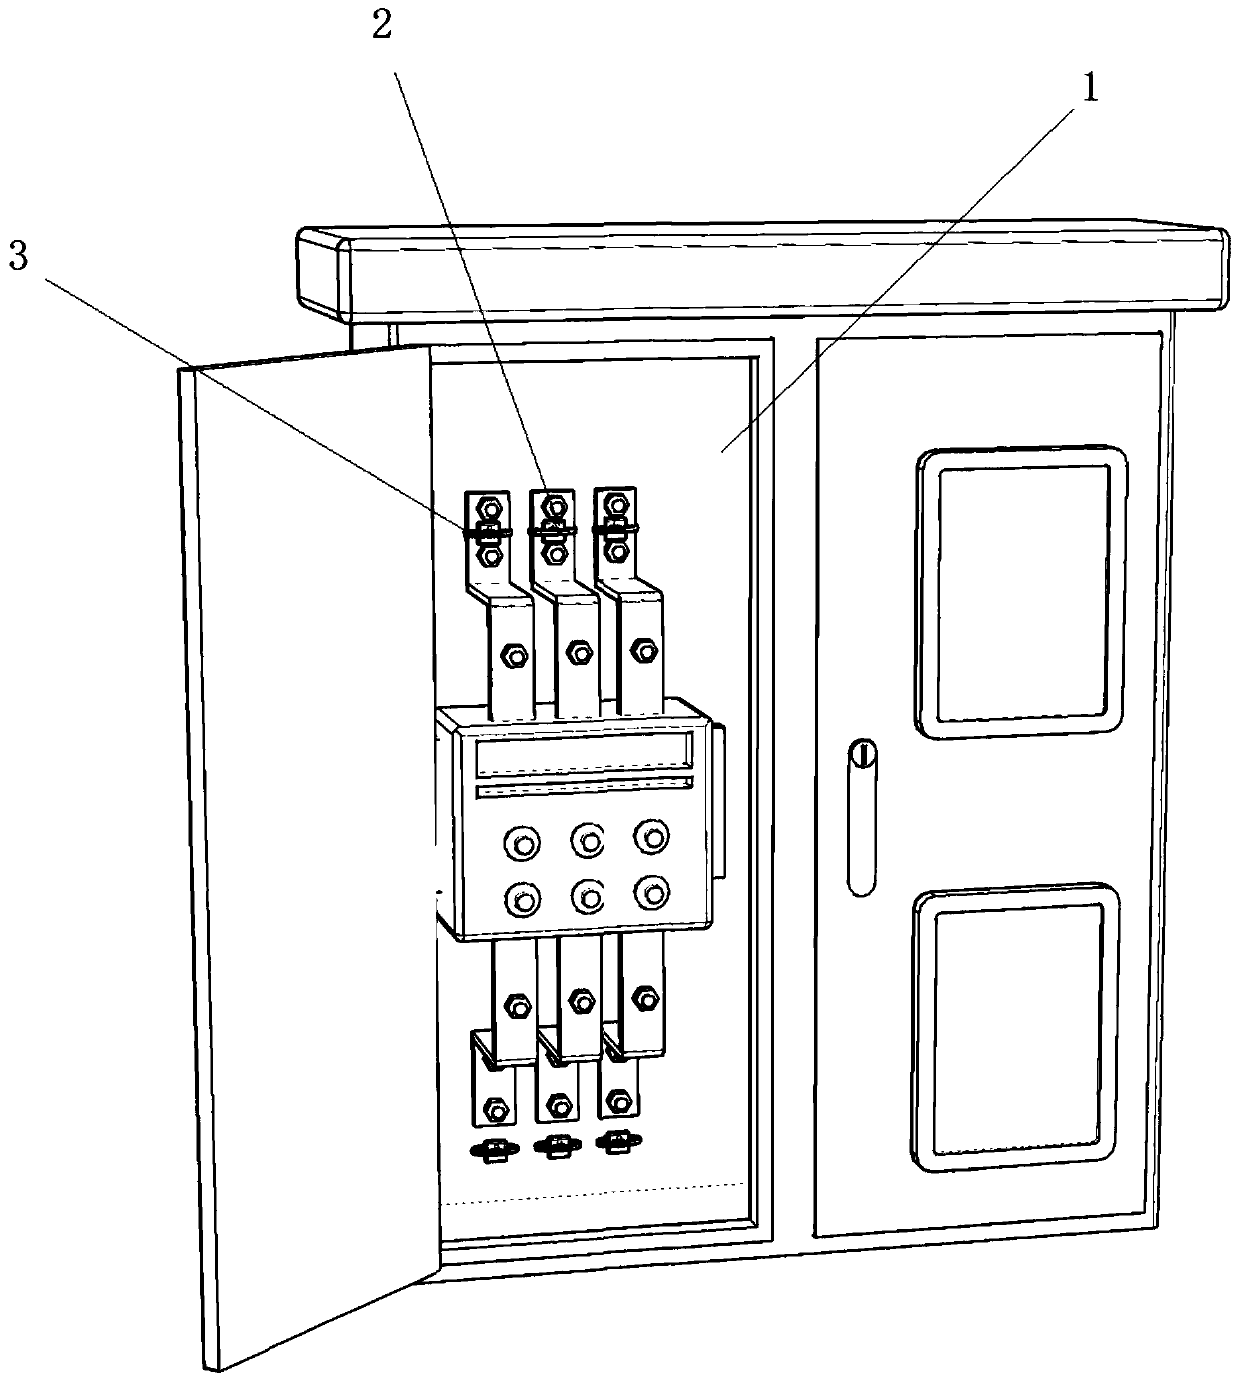 Distribution box with wireless passive temperature sensing device